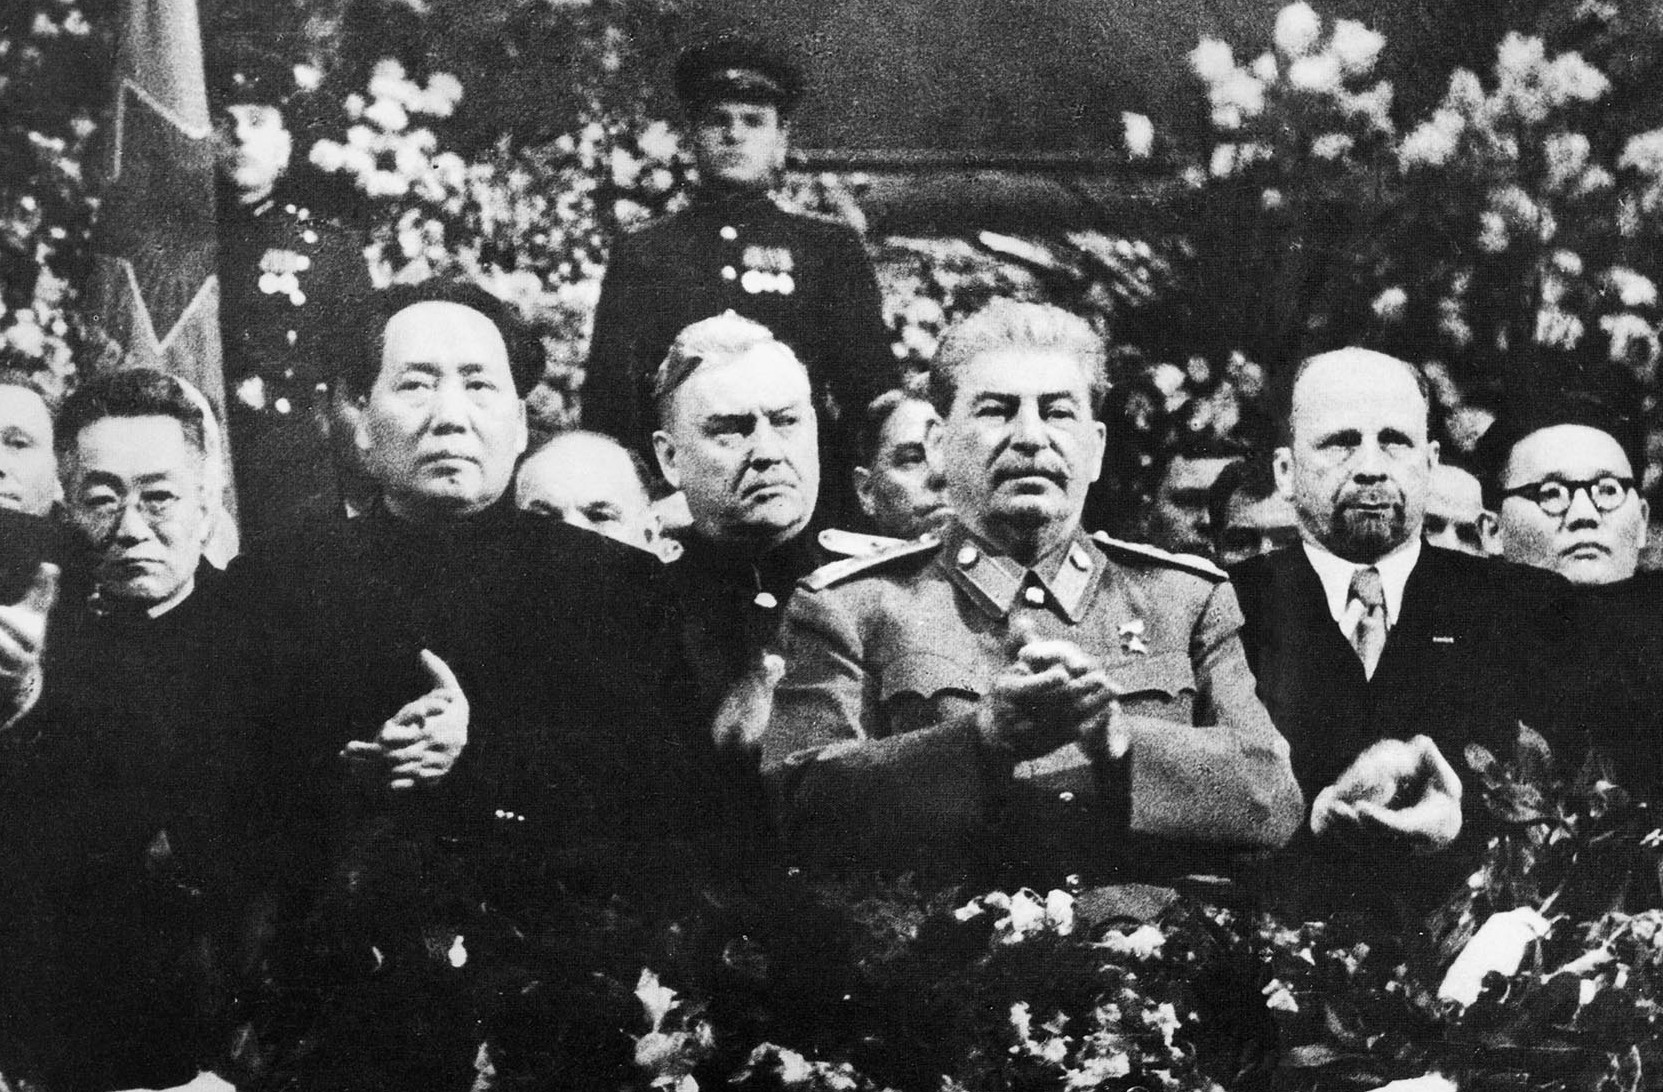 Mao Zedong, Nikolai Bulganin, Joseph Stalin, Wailter Ulbricht, and Yumjaagiin Tsedenbal celebrating Stalin's birthday, Moscow, Russia, 6 Dec 1949